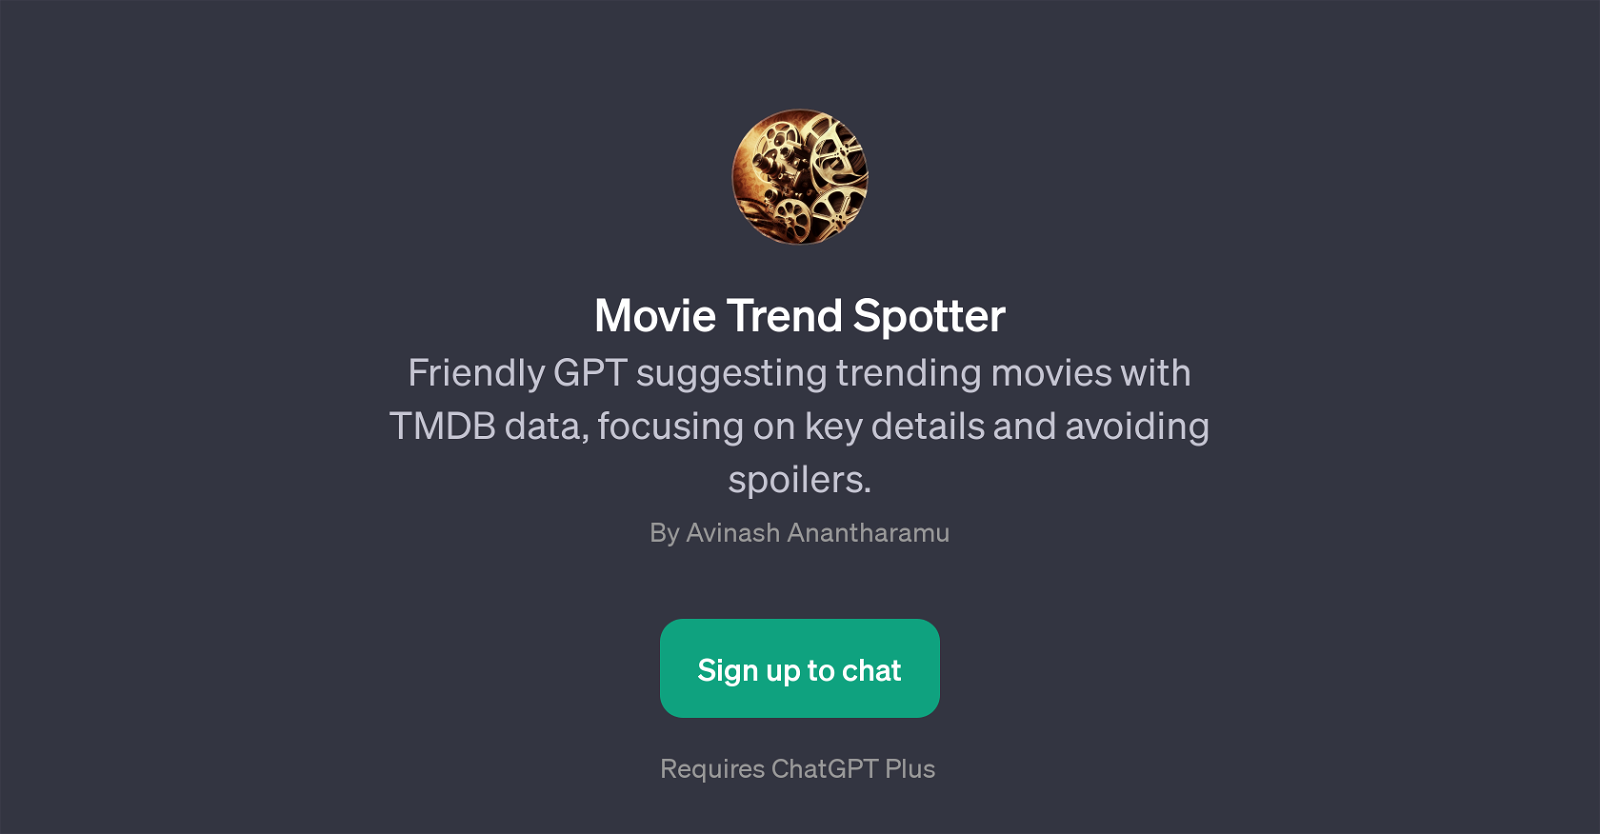 Movie Trend Spotter website